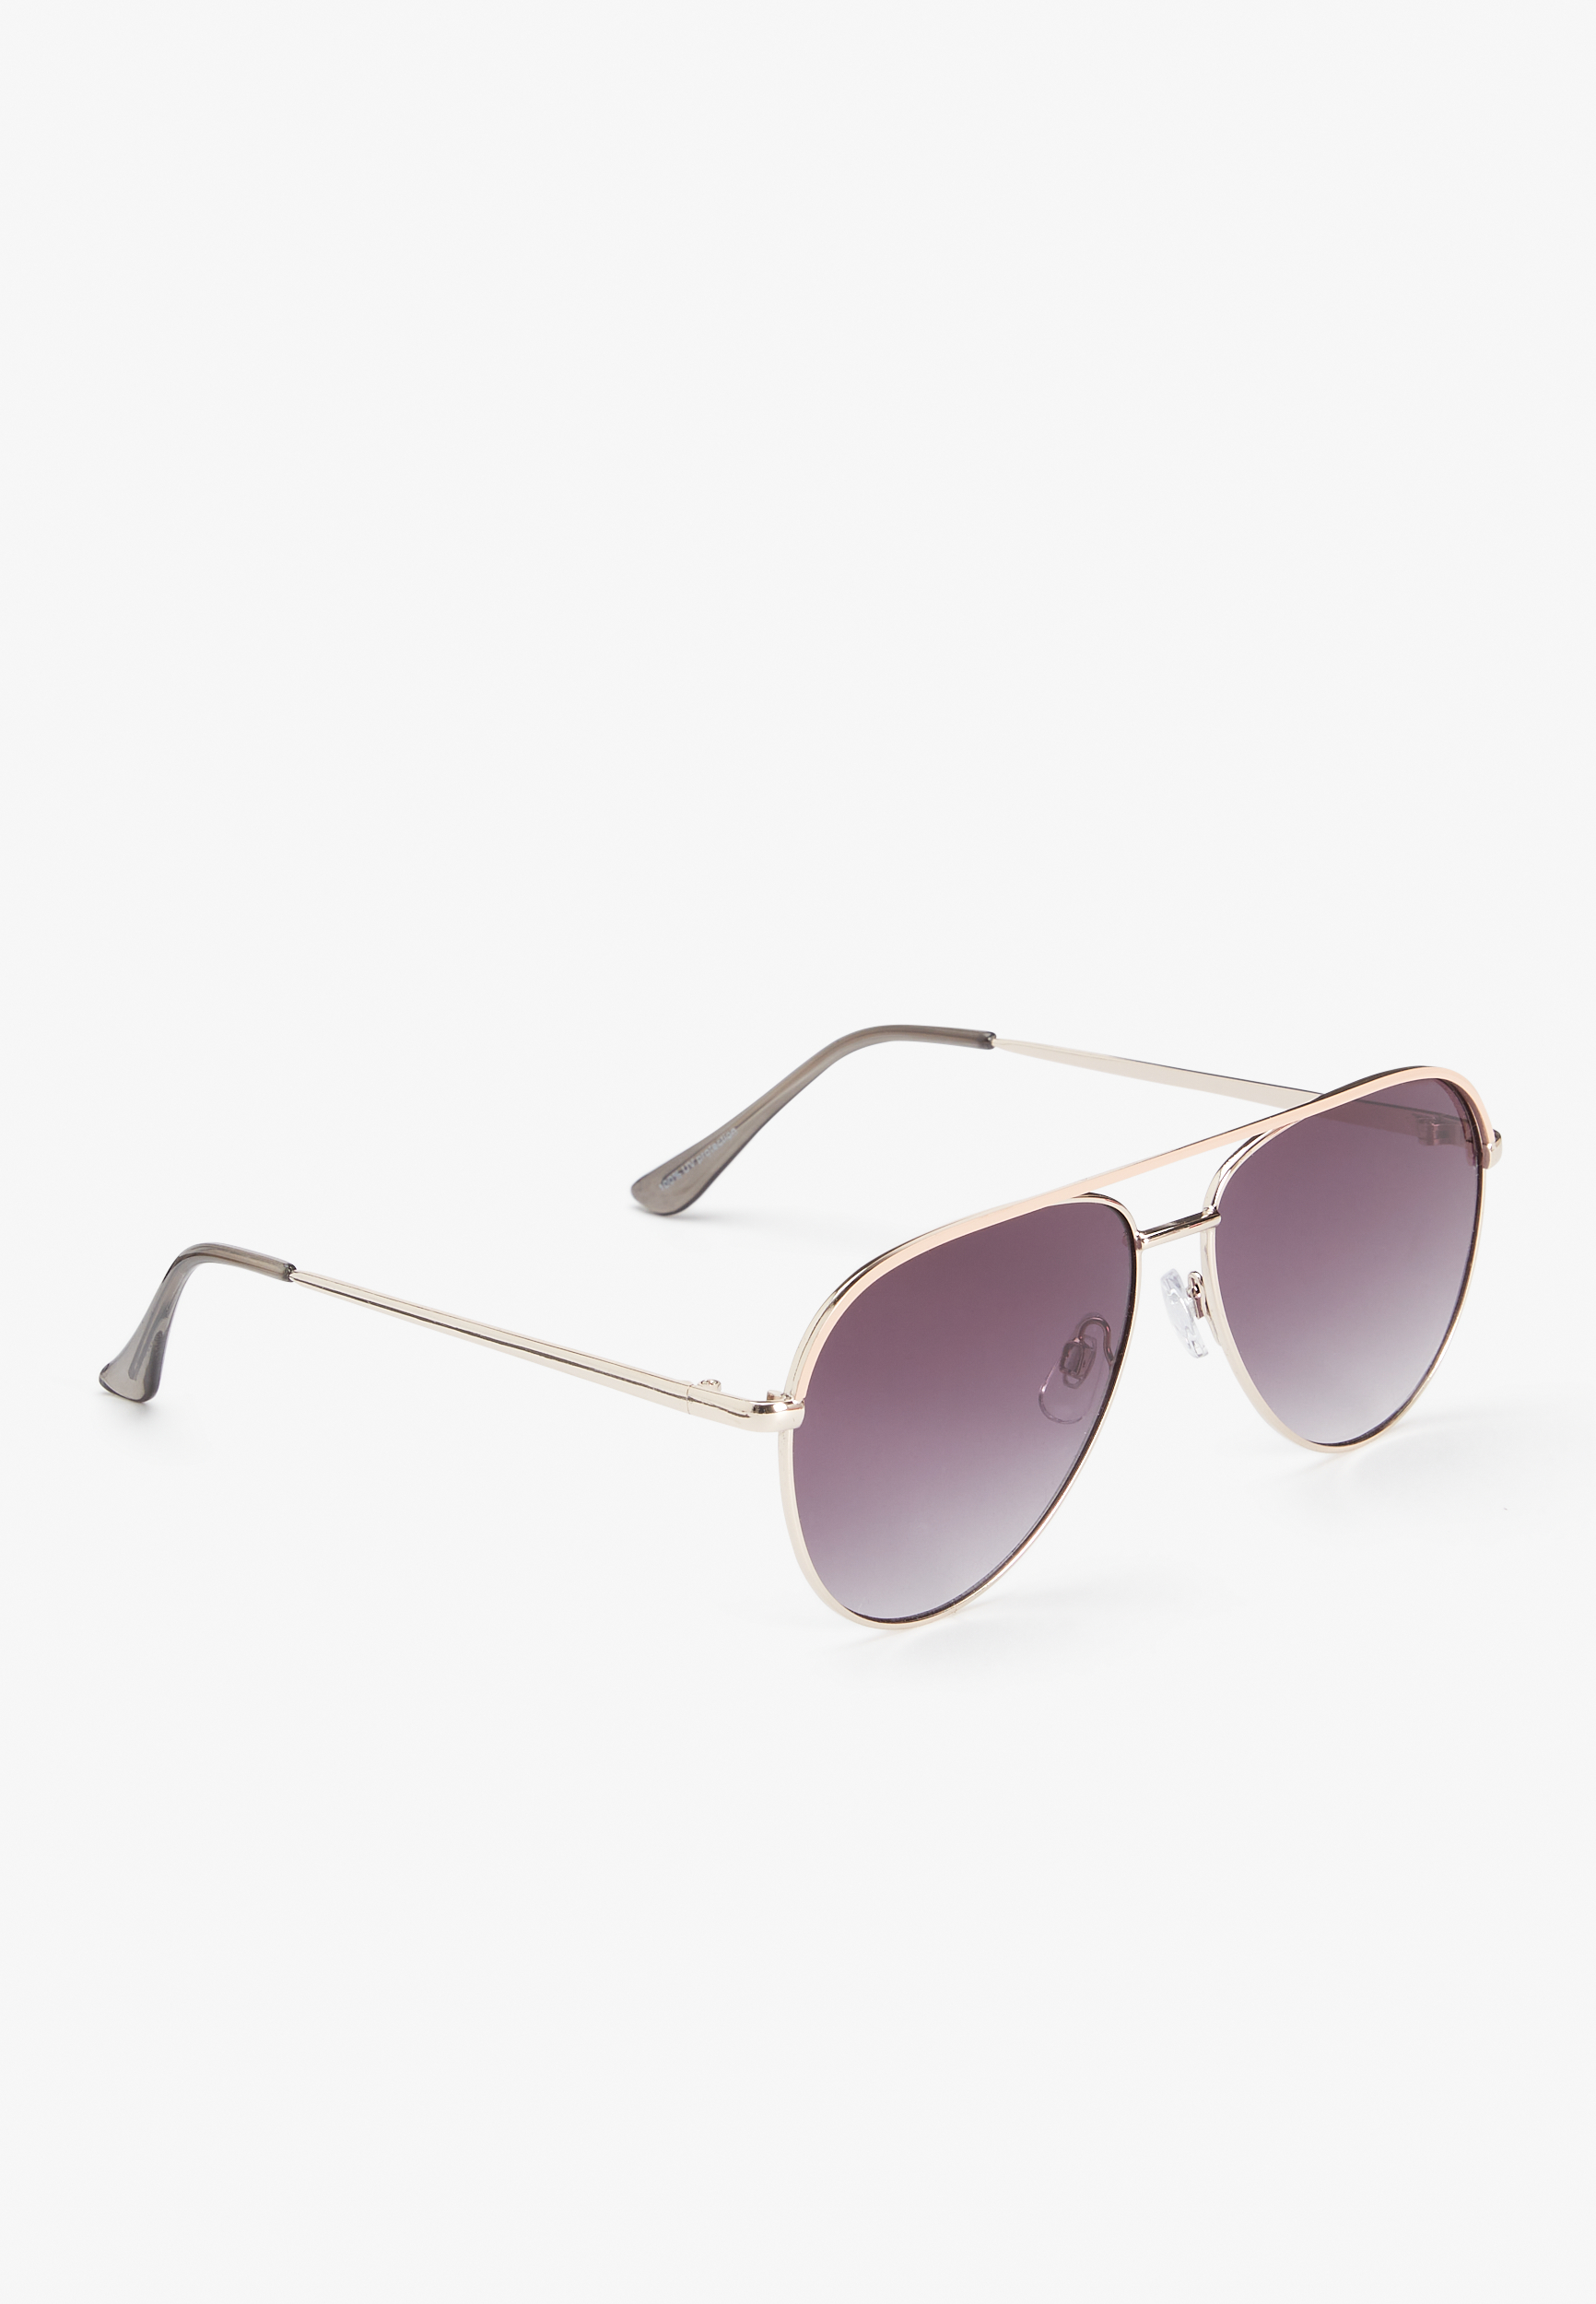 Gold Aviator Sunglasses | maurices